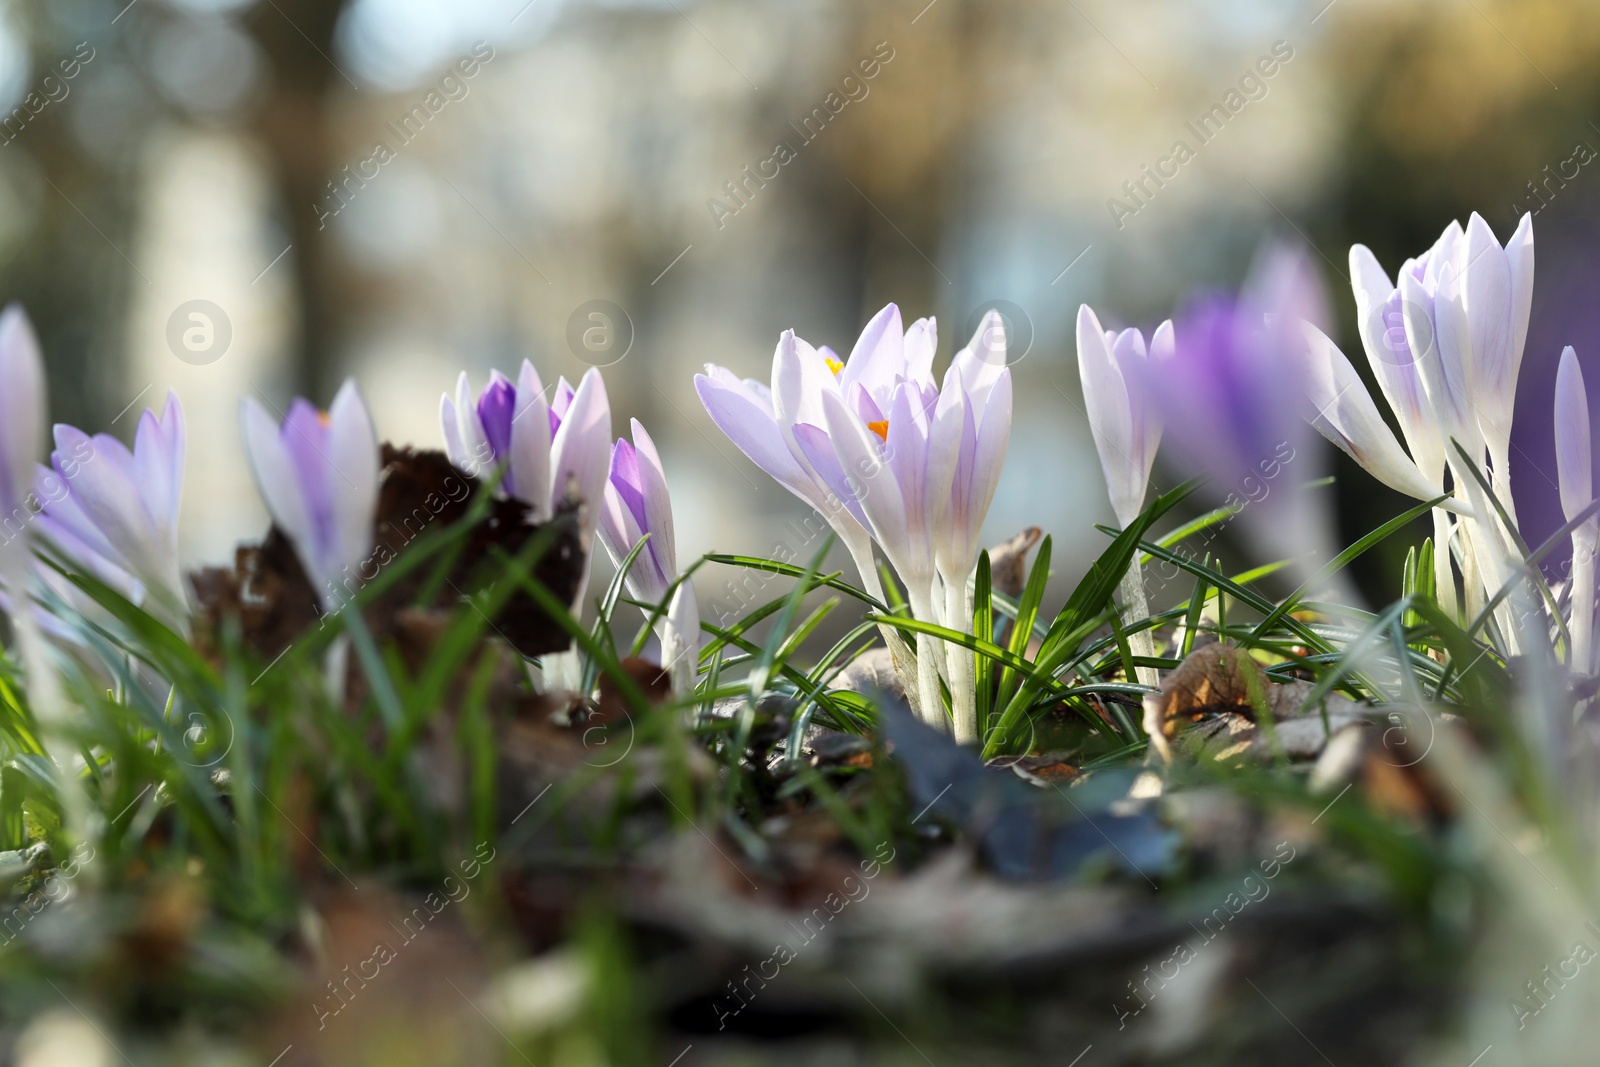 Photo of Beautiful crocus flowers growing outdoors, closeup view